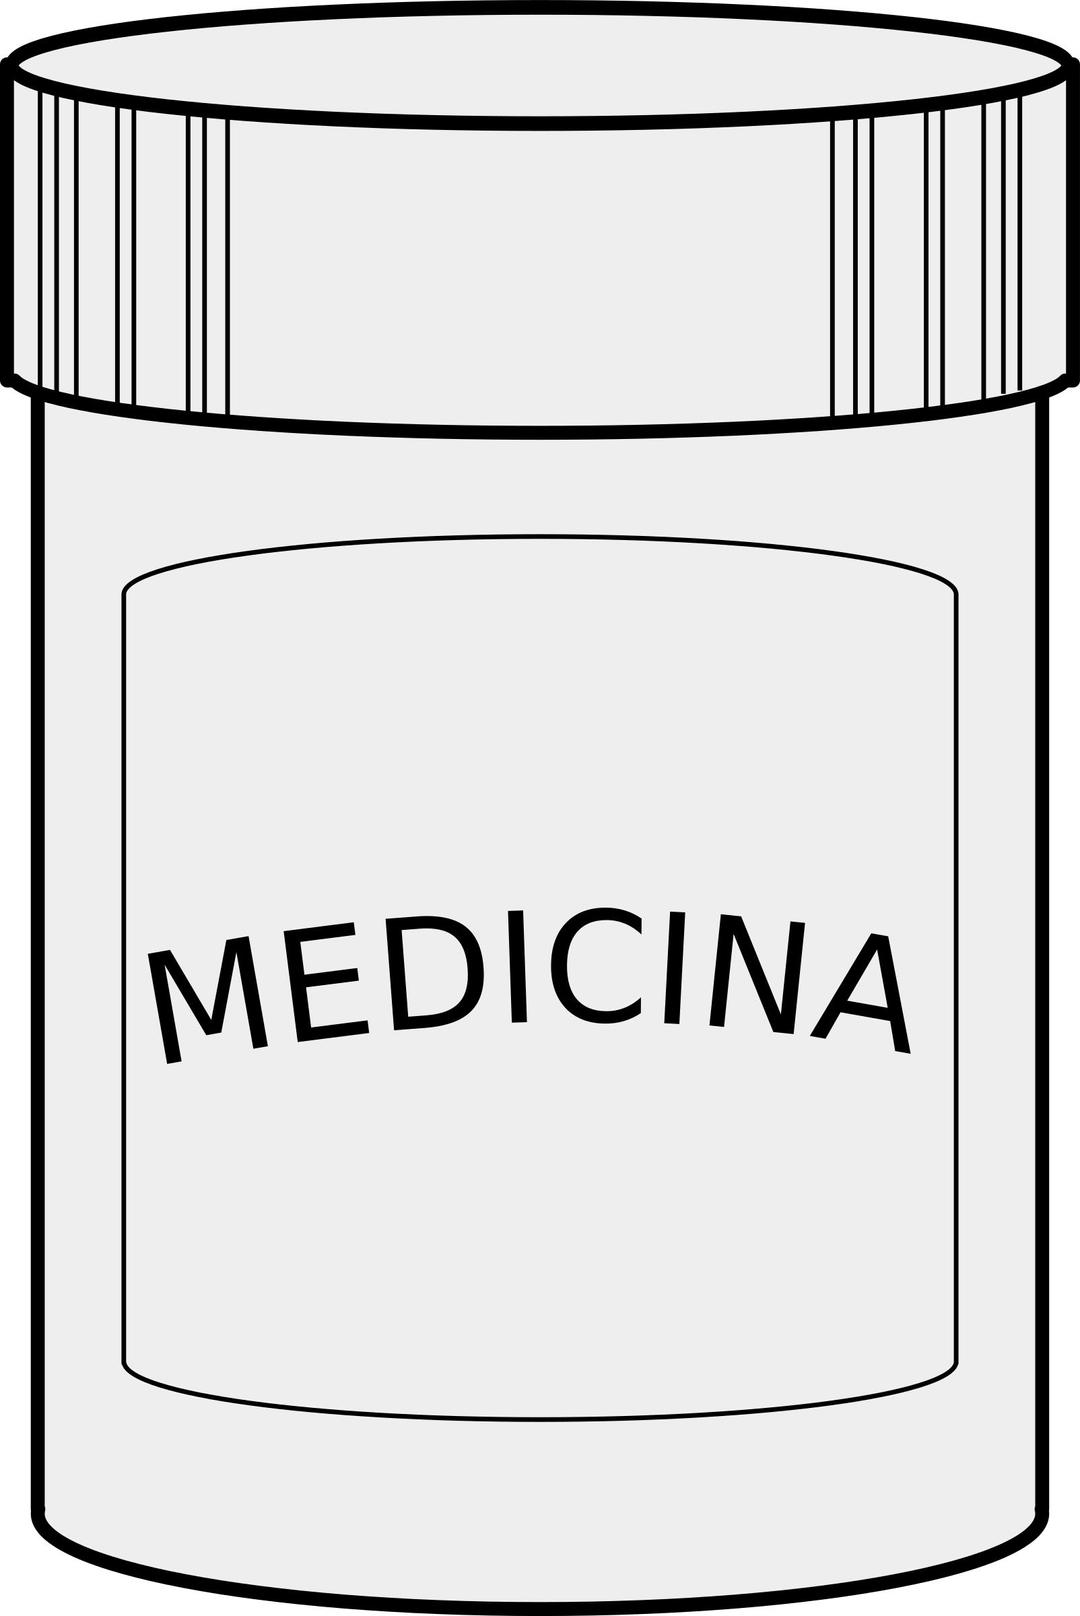 Medicina png transparent